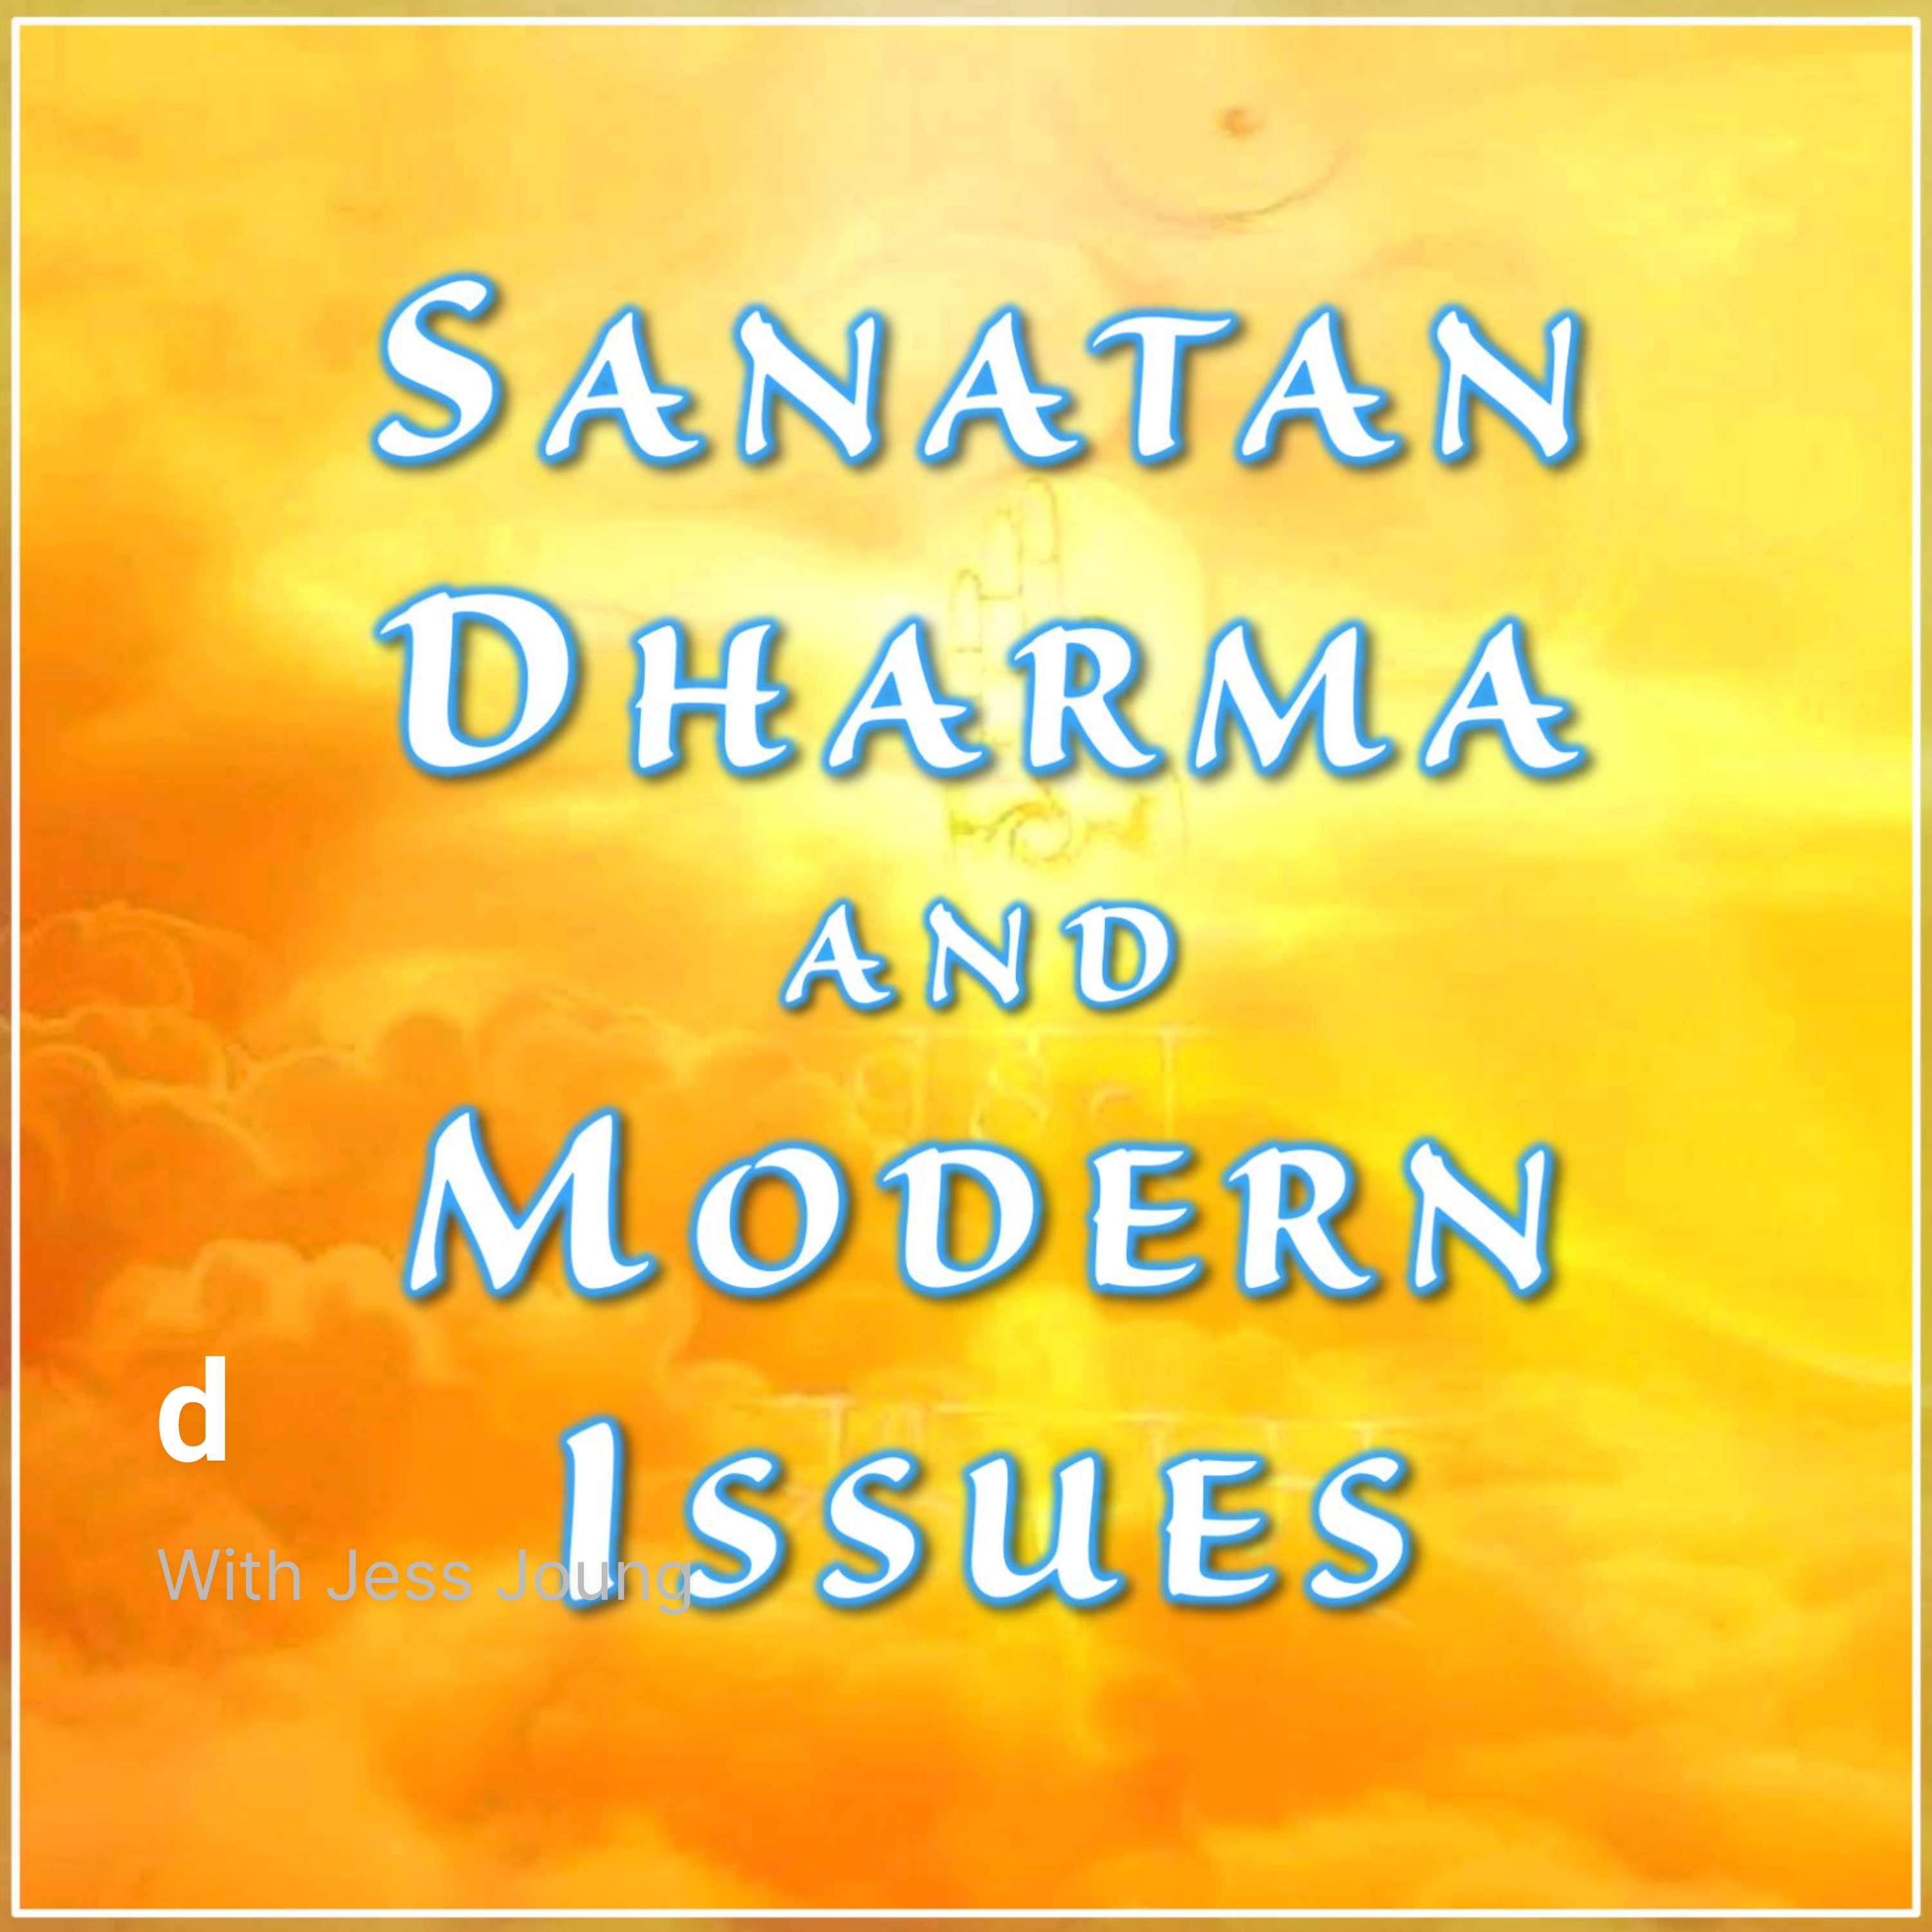 Sanatana Dharma and Yoga